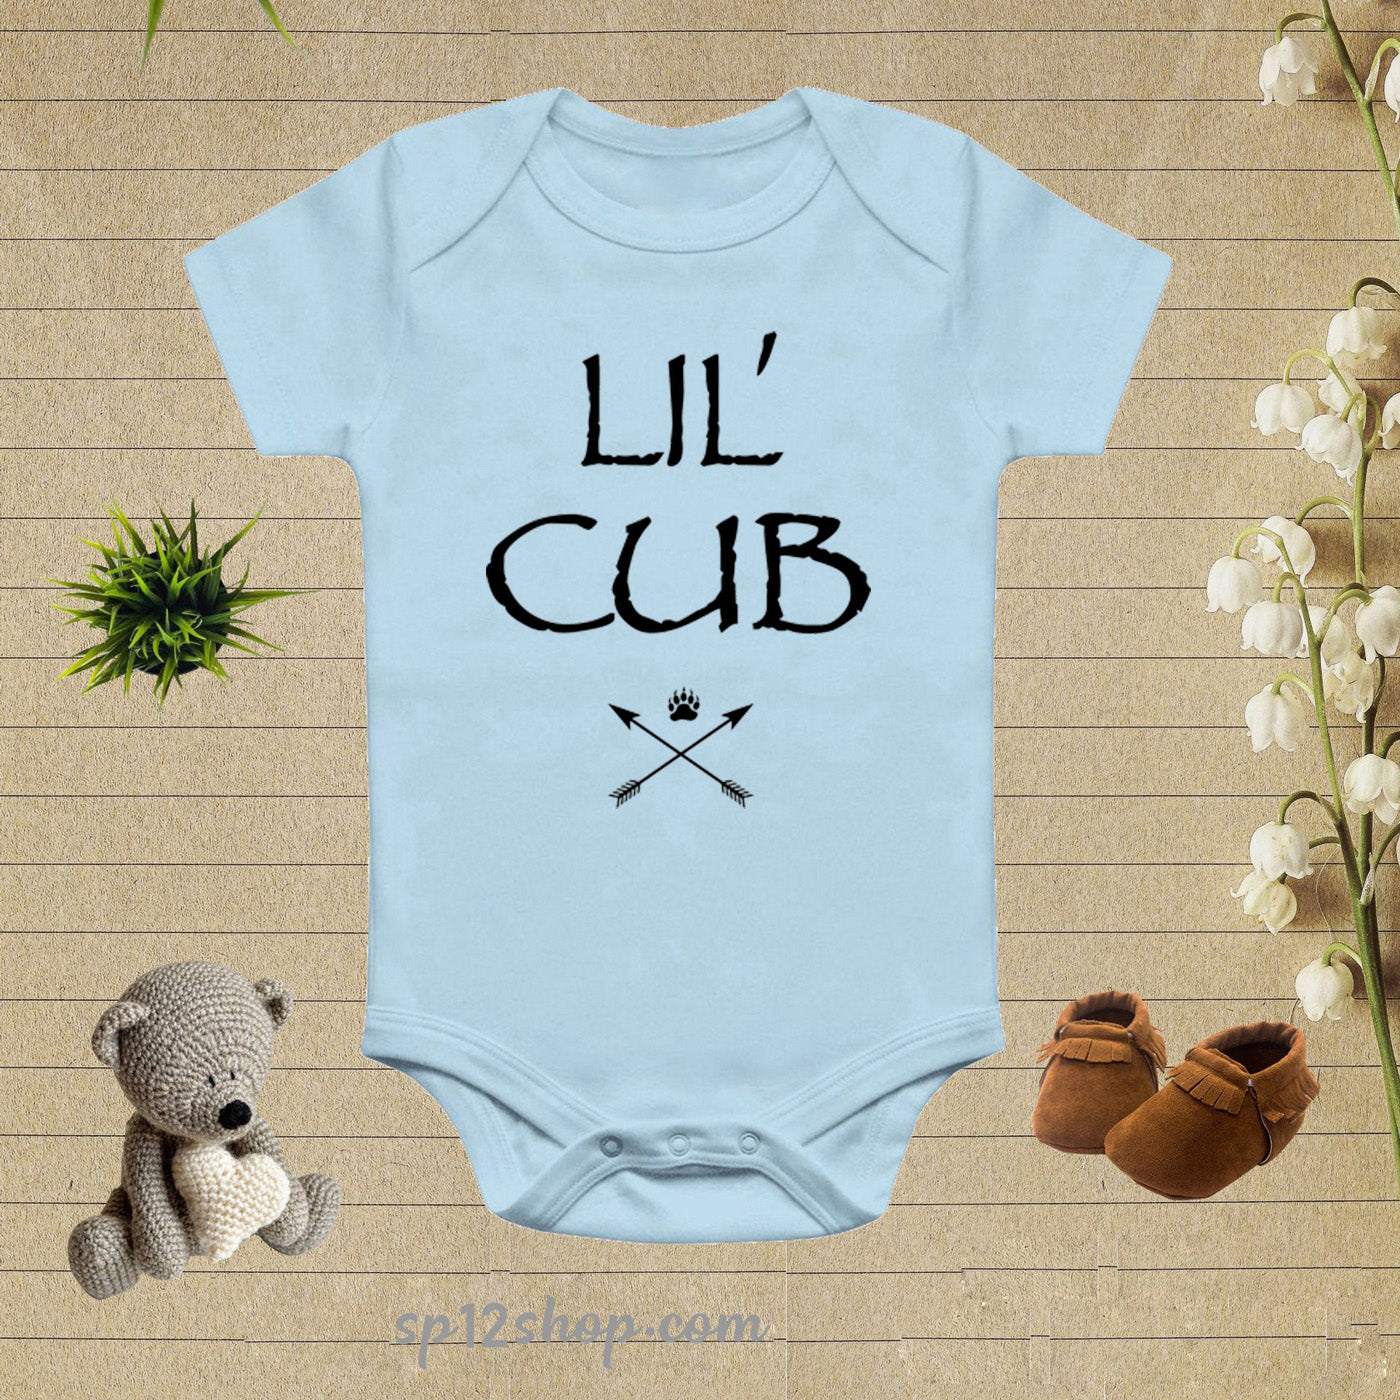 Lil' Cub Funny Gift Baby Bodysuit Onesie